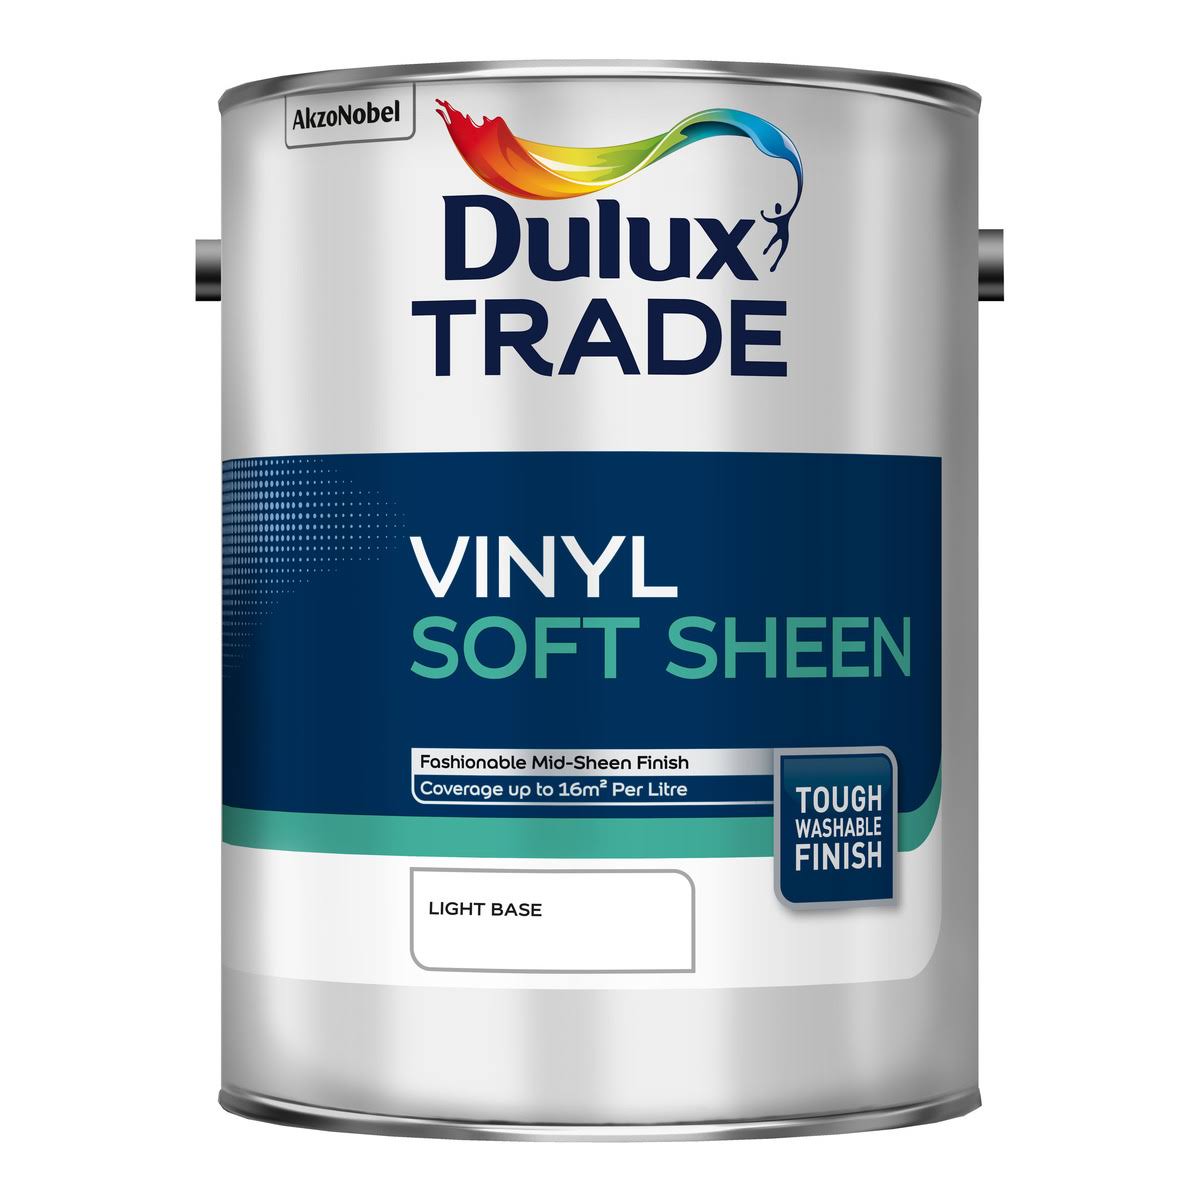 Dulux Vinyl Soft Sheen Paint - Light Base